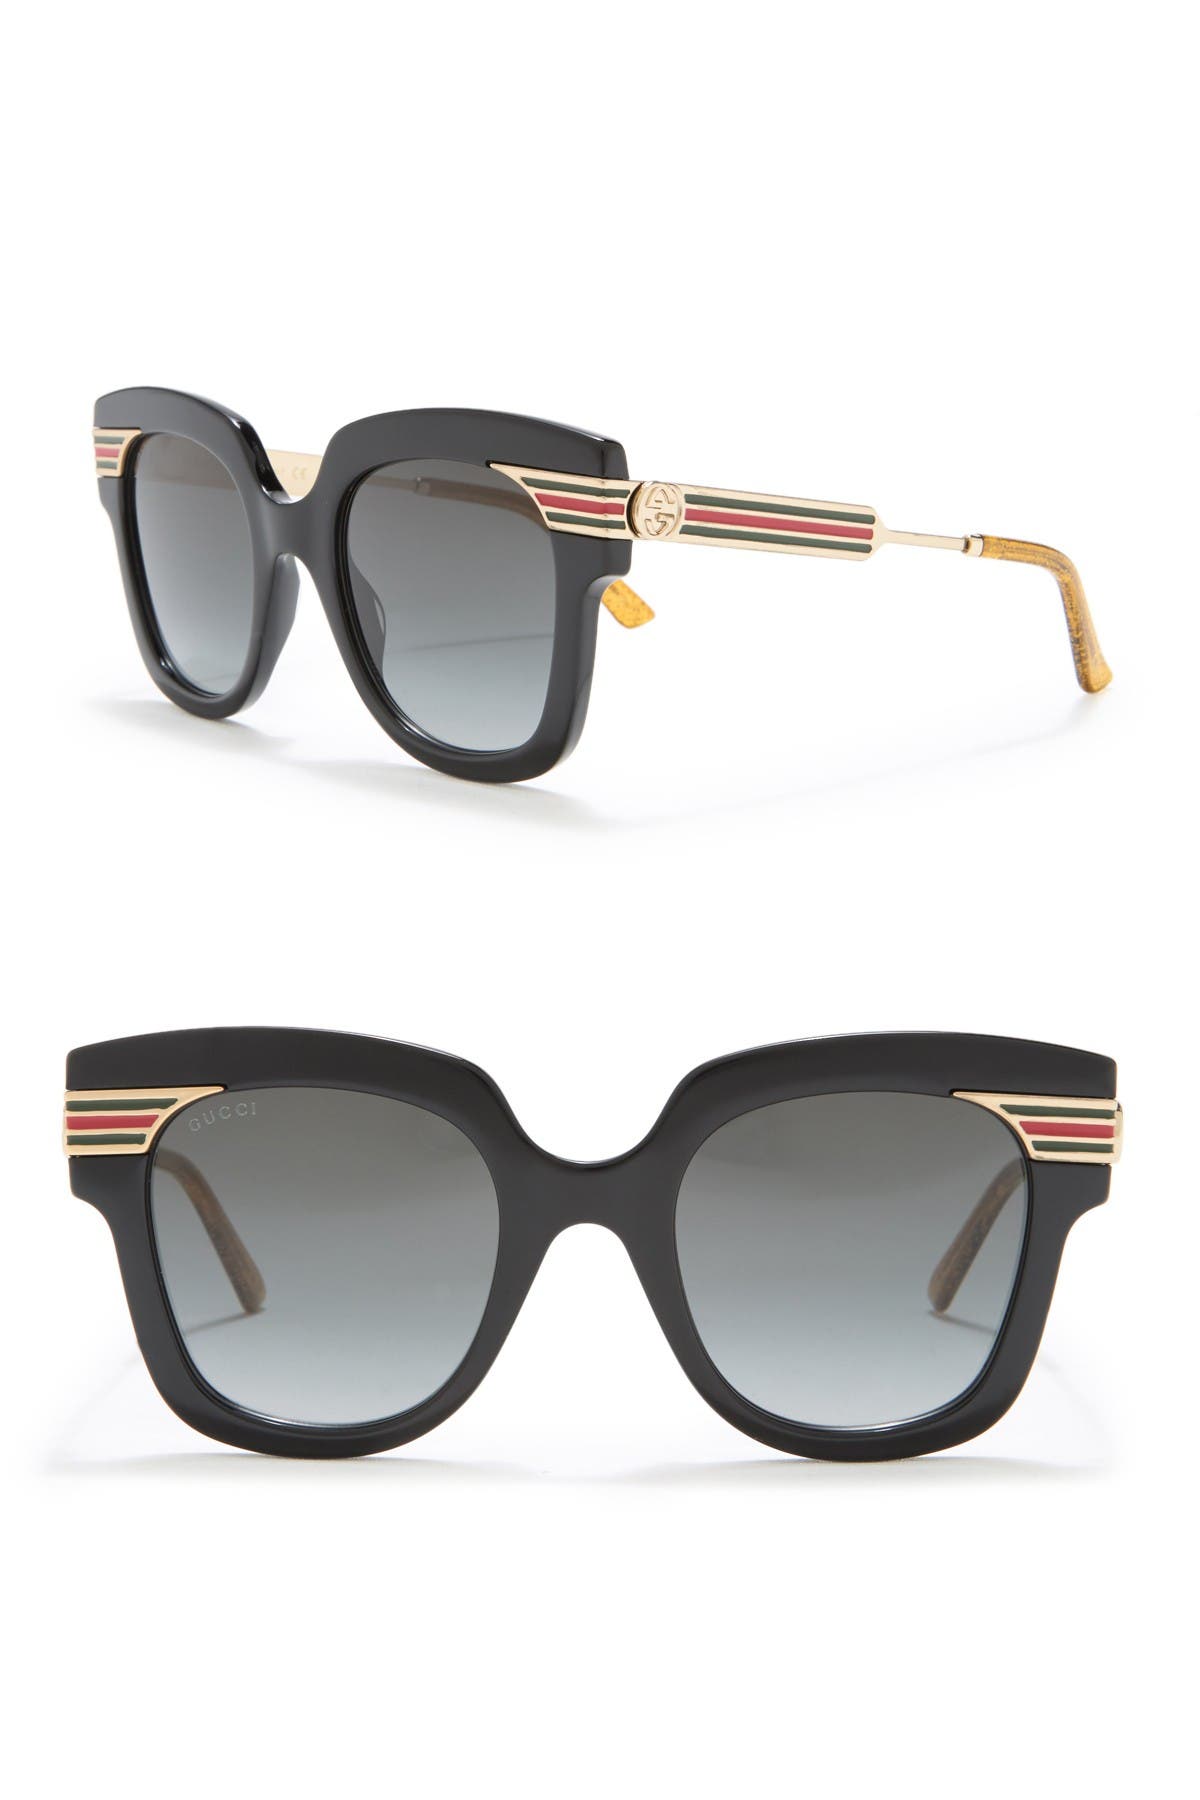 gucci 50mm square cat eye sunglasses